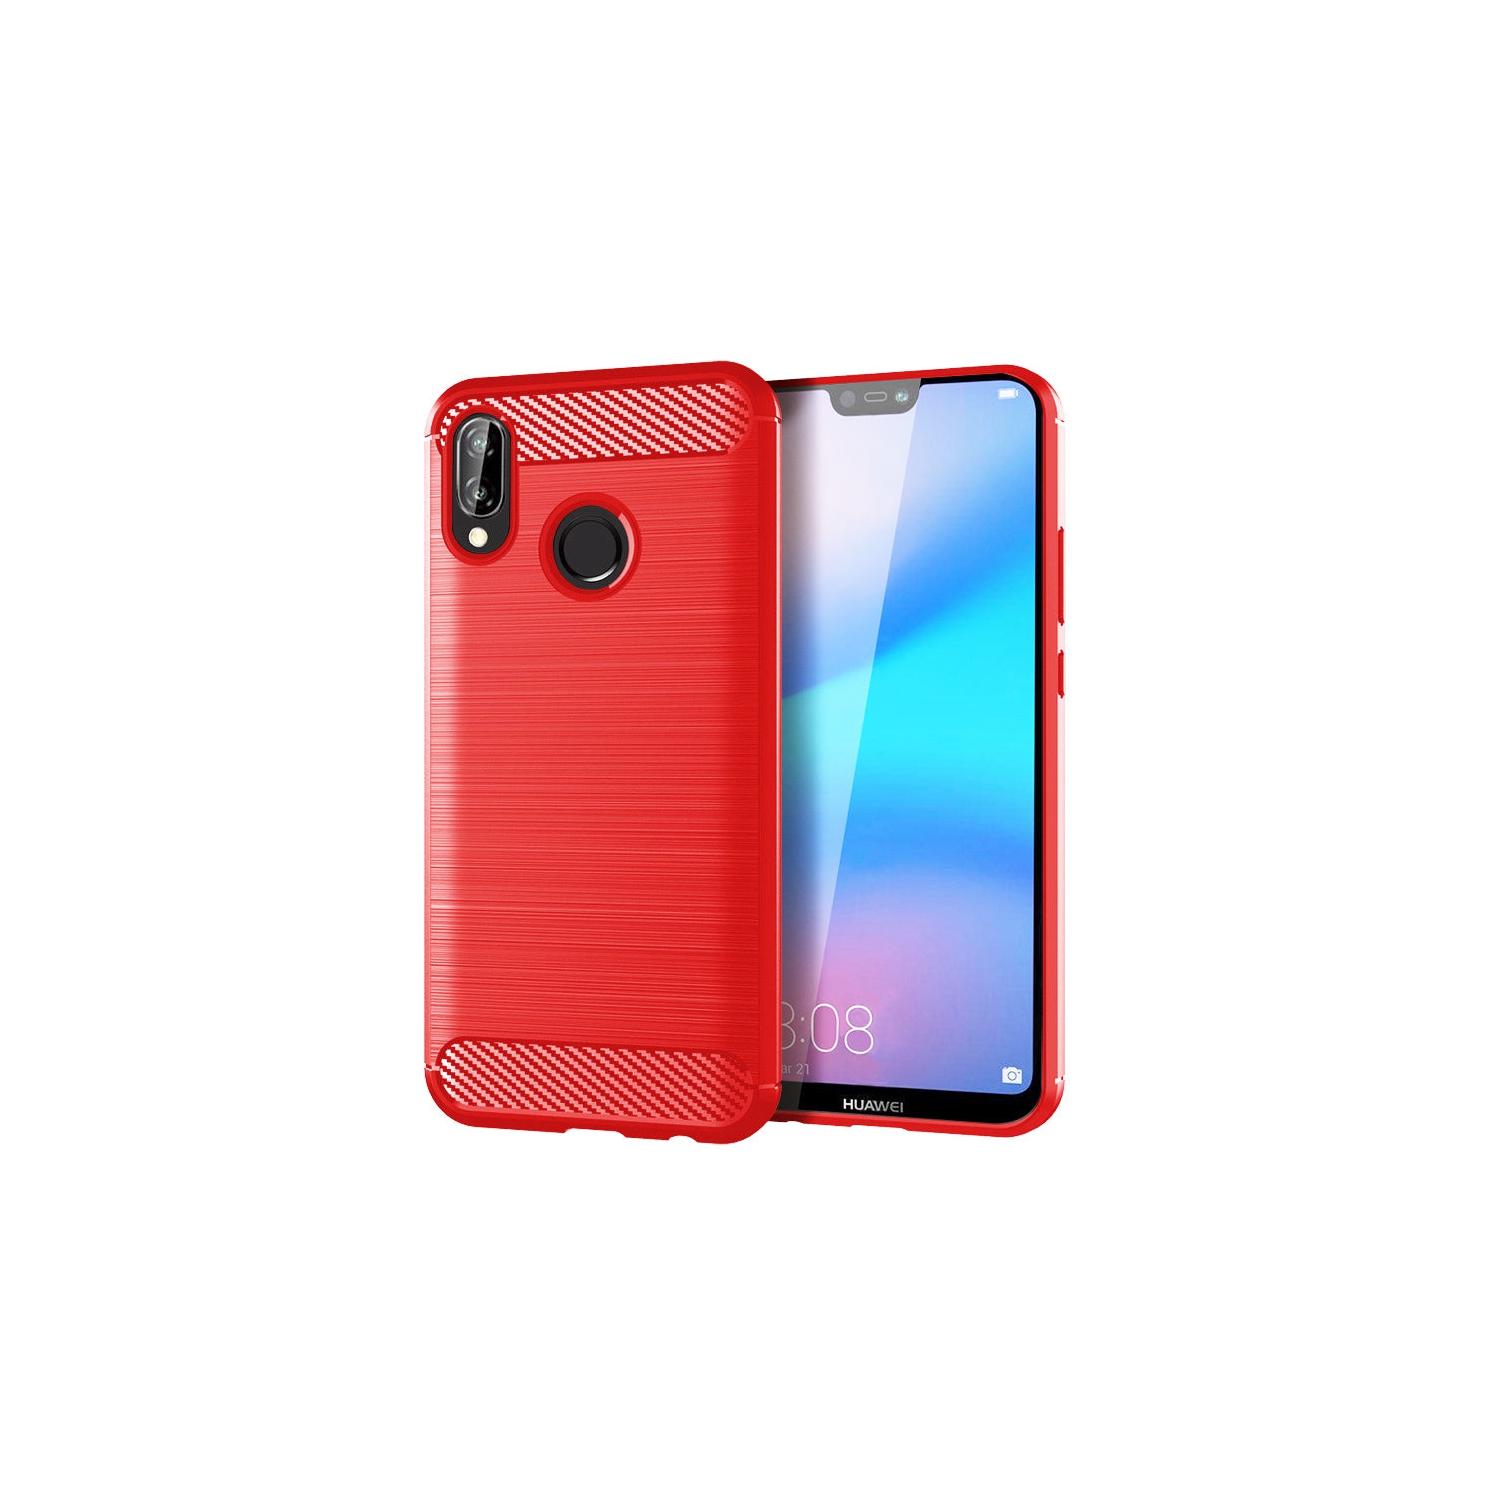 PANDACO Red Brushed Metal Case for Huawei P20 Lite